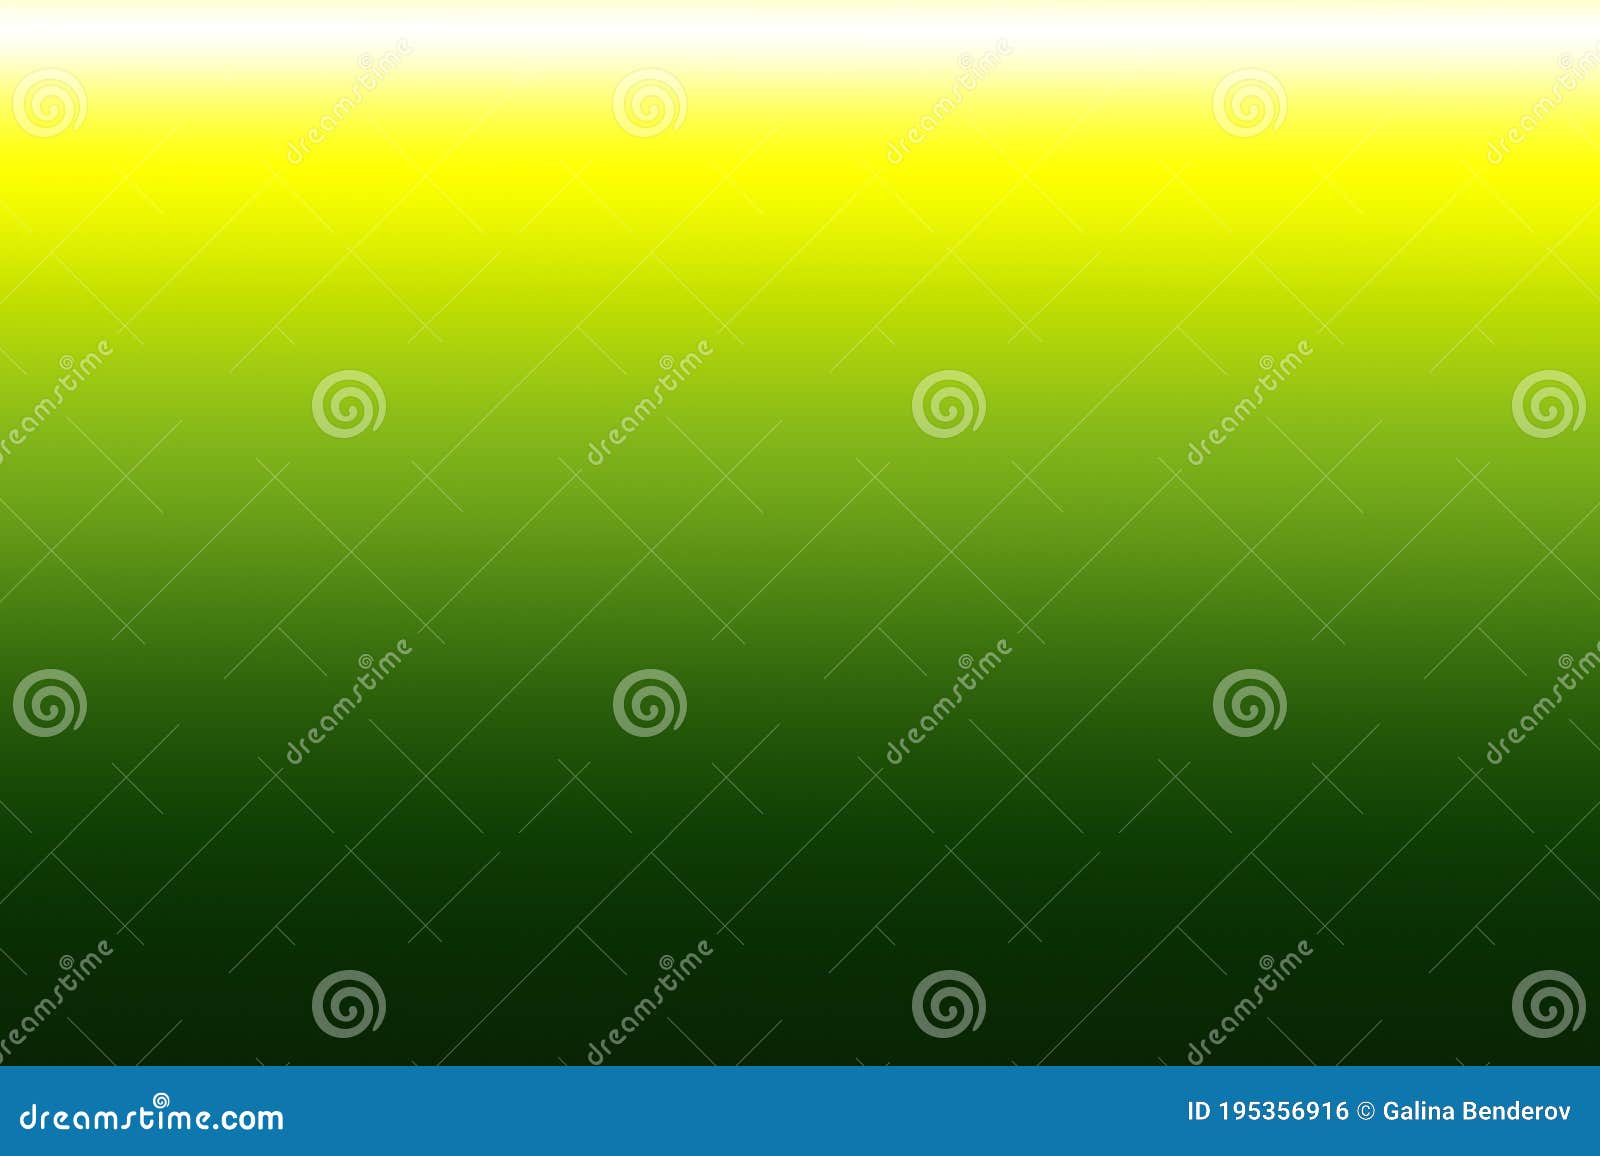 Minimalistic Green Studio Background. Bright Fresh Yellow-green Shades.  Smooth Shiny Texture. Horizontal Lines Stock Illustration - Illustration of  dark, bright: 195356916